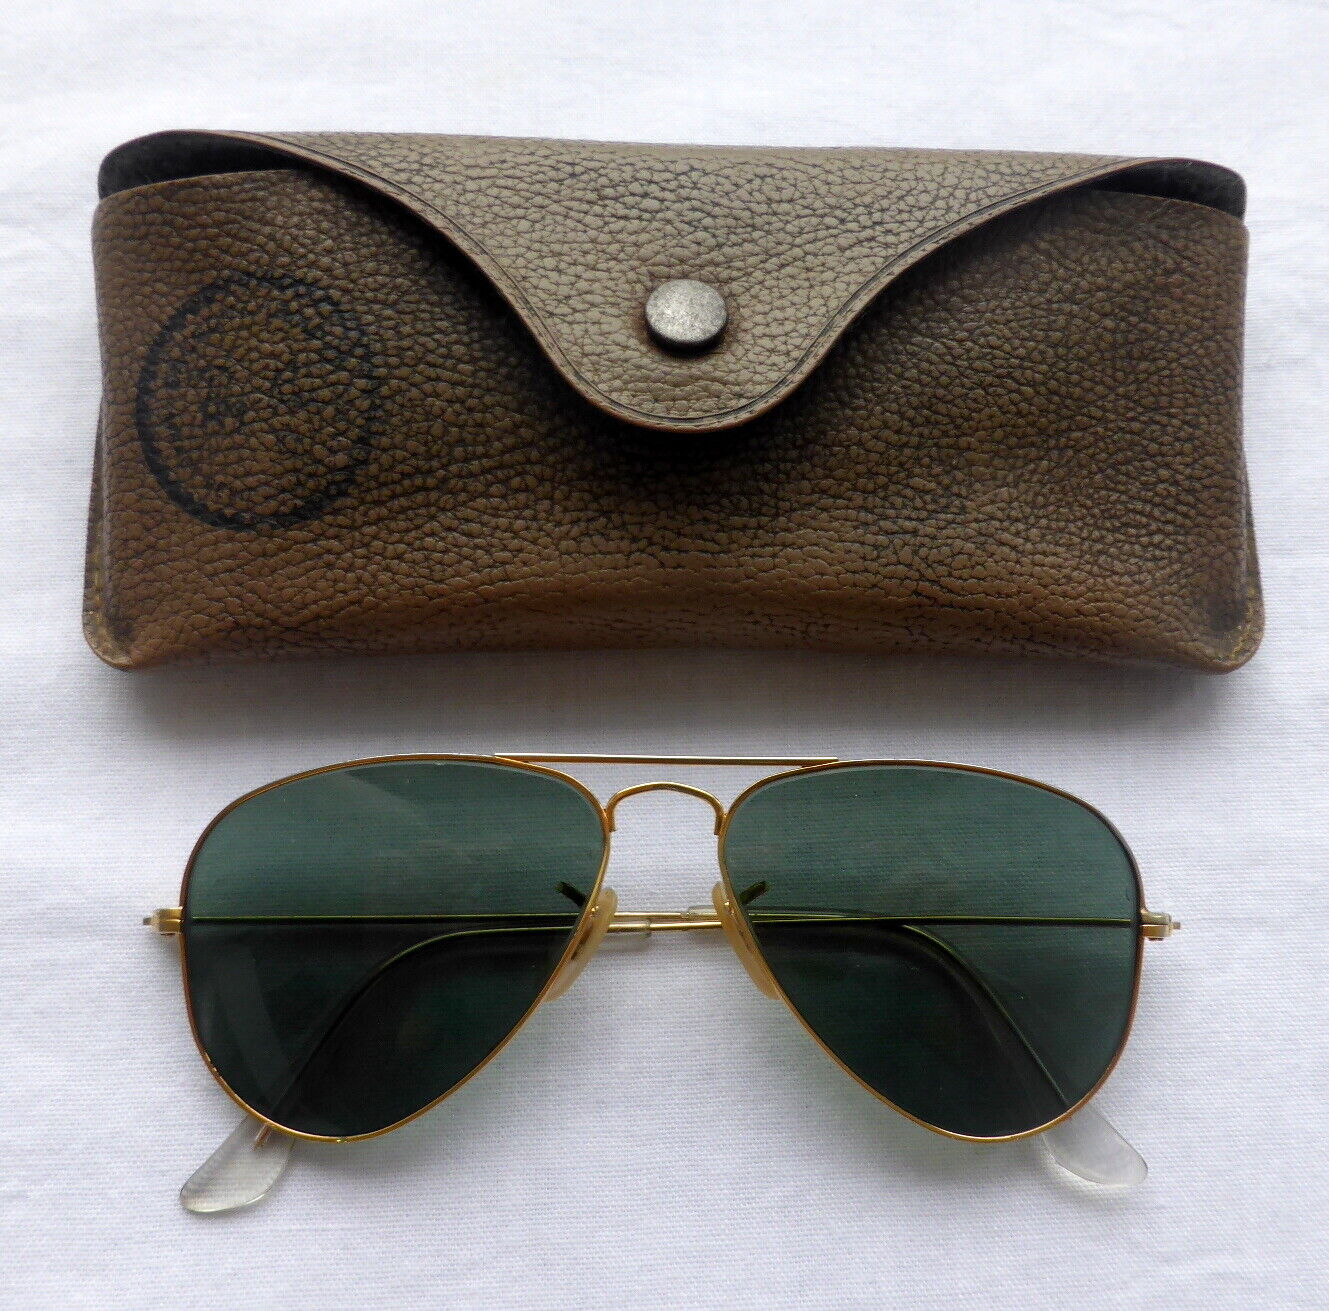 Vintage RAY BAN aviator sunglasses case | eBay